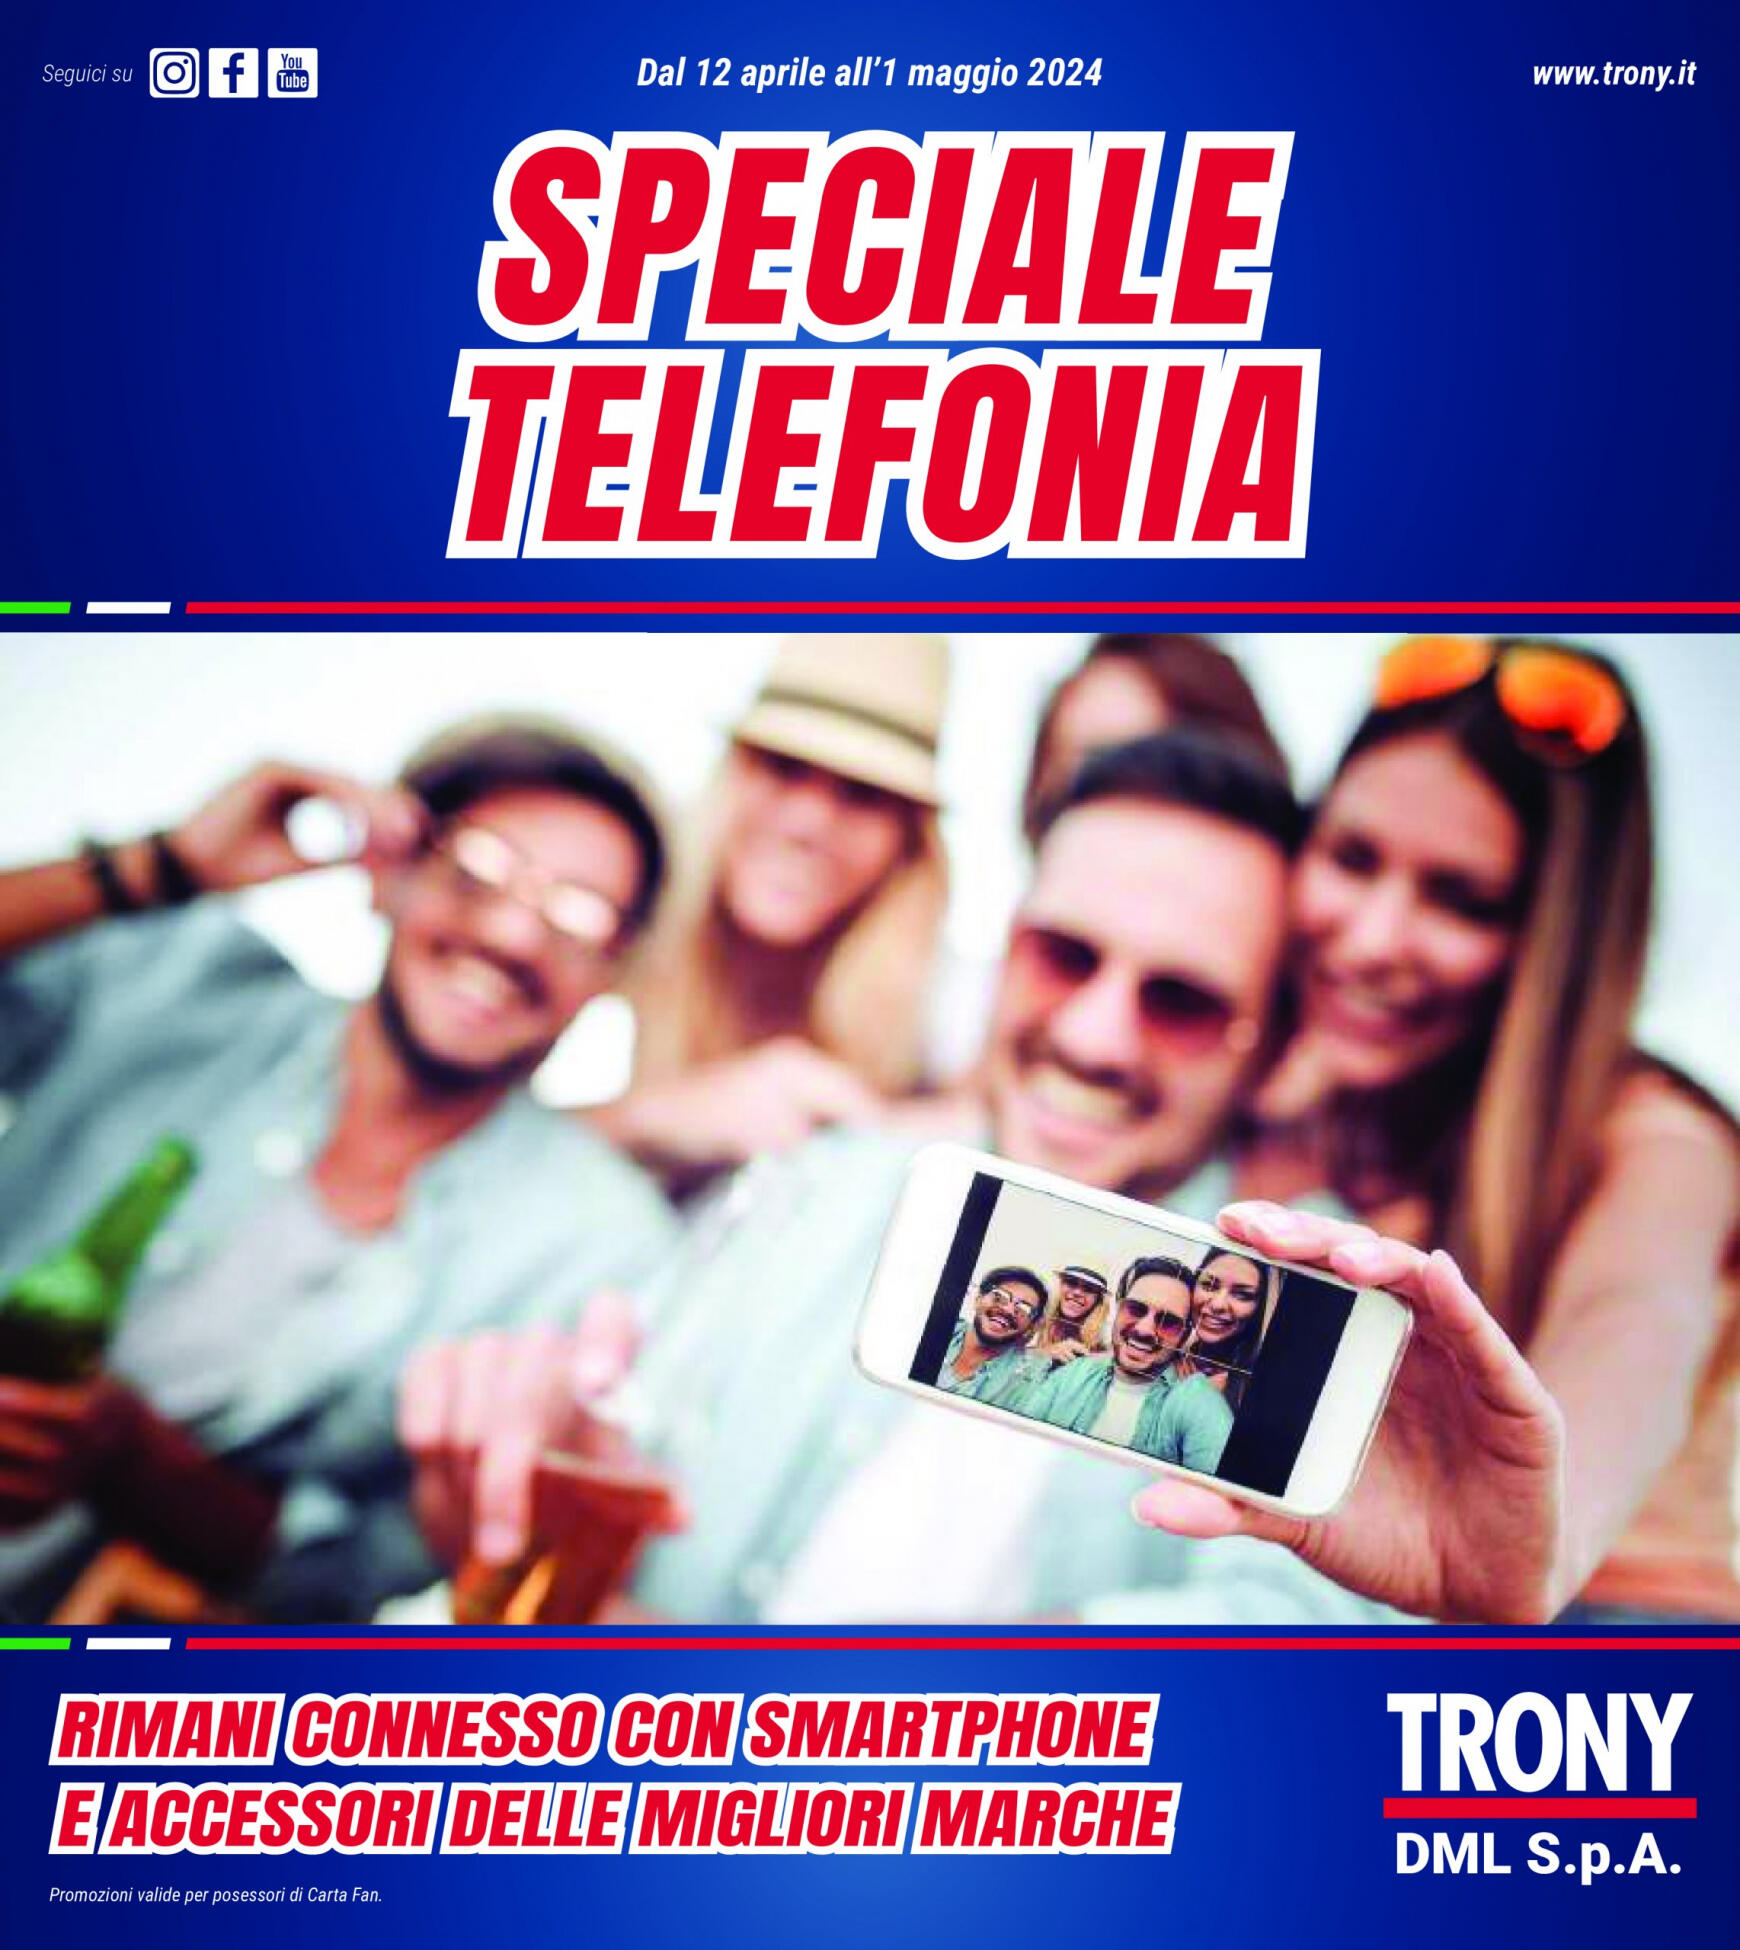 trony - Nuovo volantino Trony 12.04. - 01.05. - page: 41